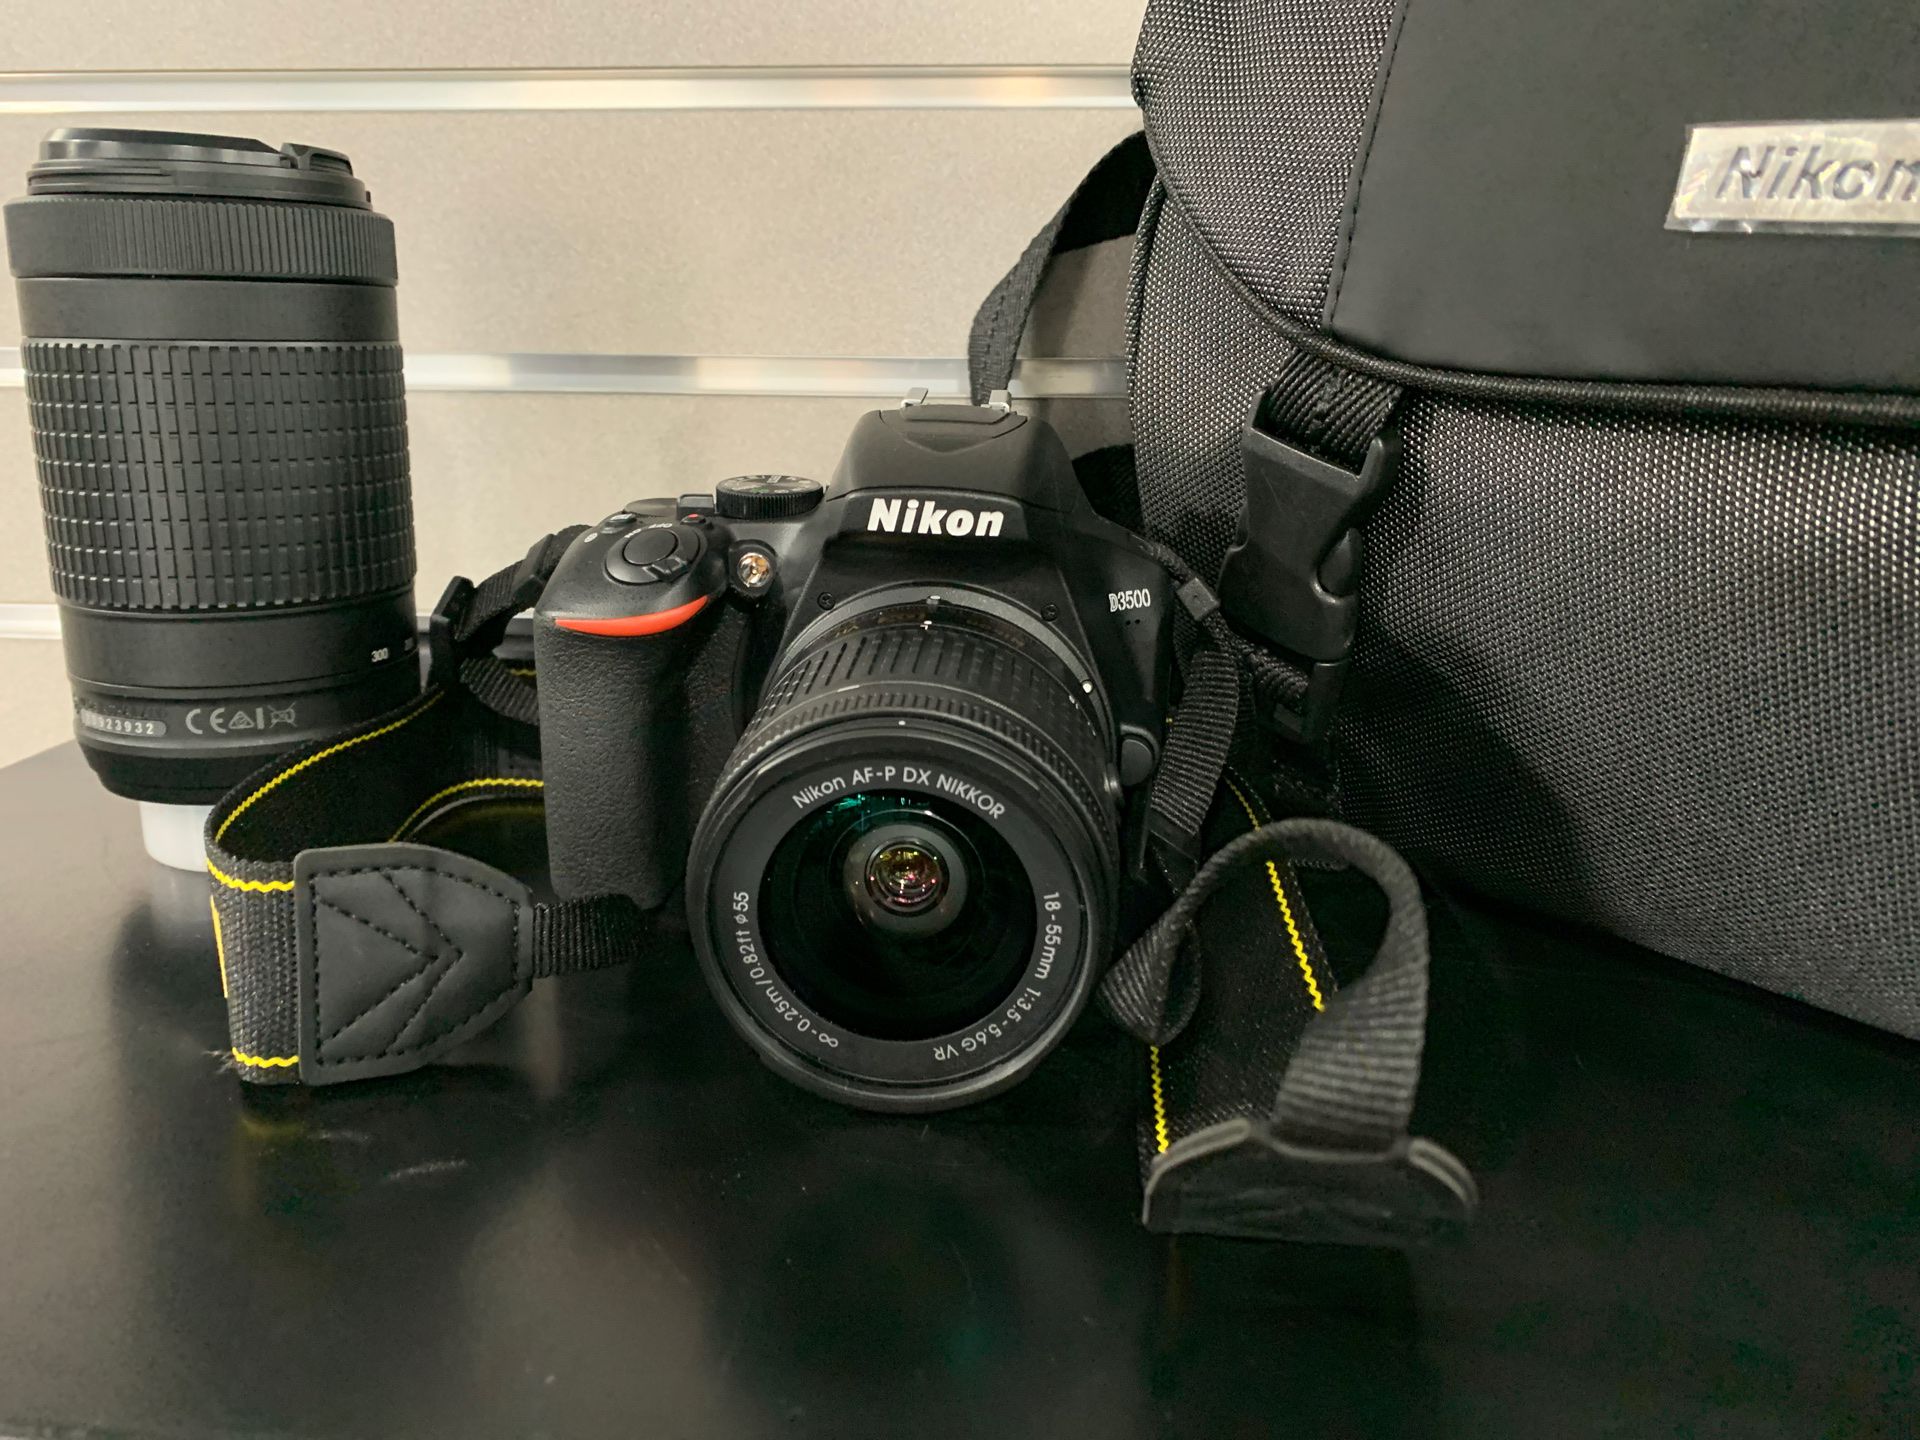 Nikon D3500 with extra lenses